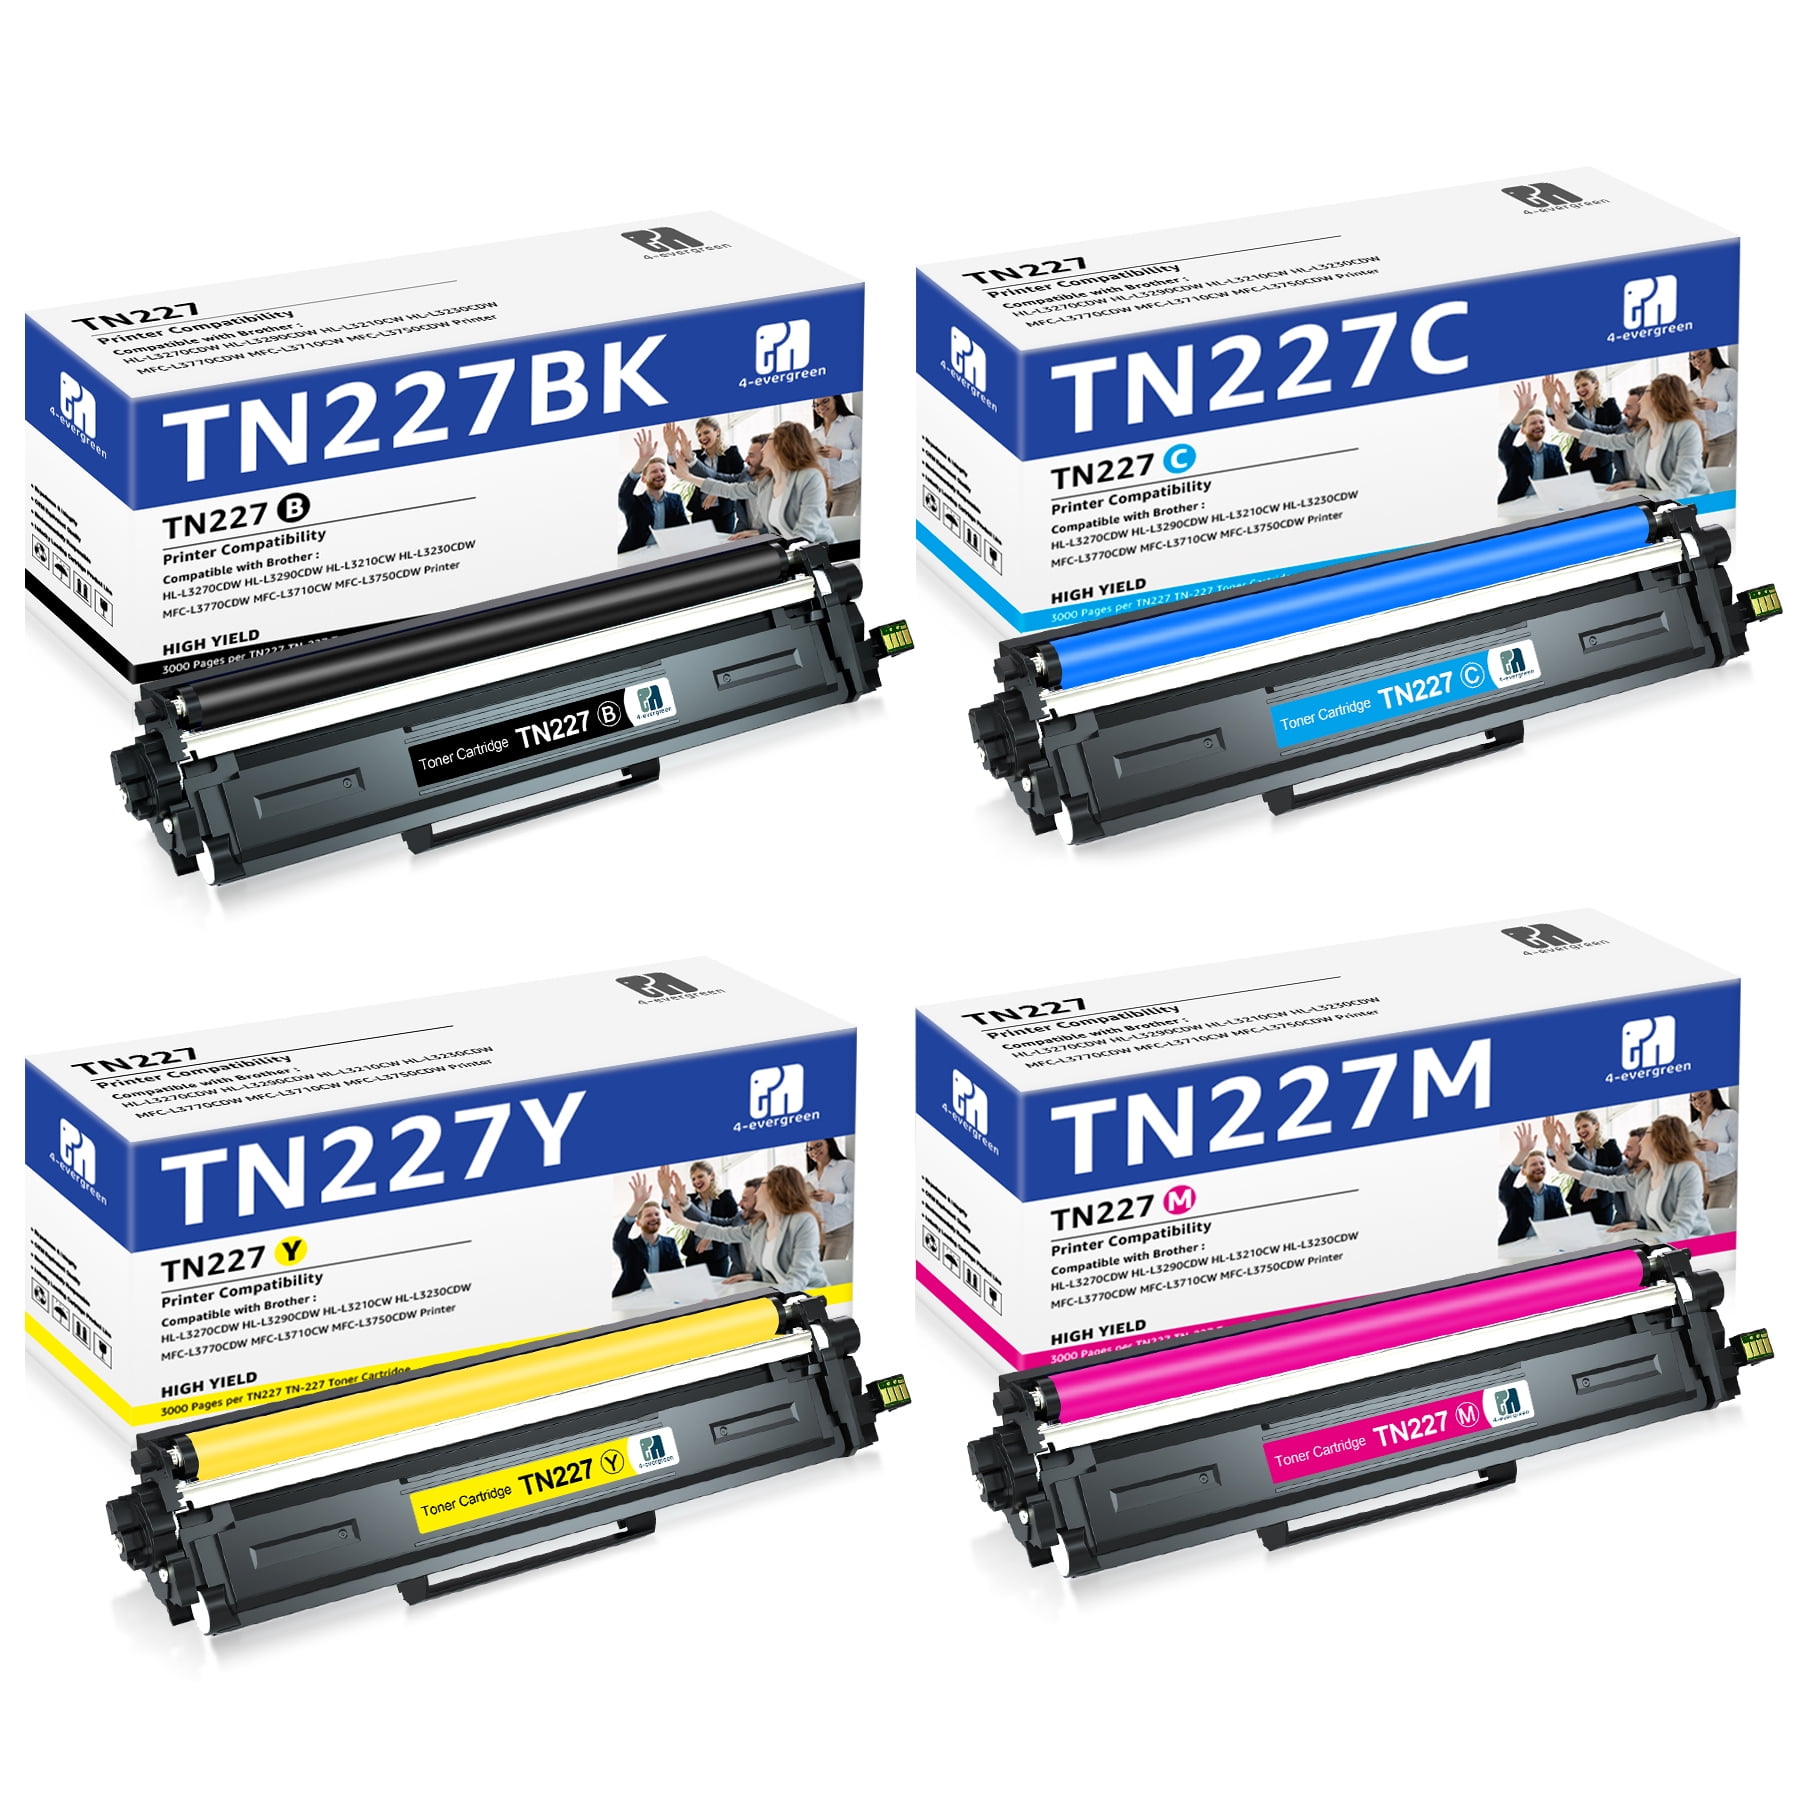 Toner Kingdom Compatible Toner Cartridge Replacement for Brother TN2420  TN2410 for HL-L2350DW MFC-L2710DW HL-L2310D HL-L2370DN HL-L2375DW MFC-L2710DN  MFC-L2730DW MFC-L2750DW DCP-L2510D DCP-L2530DW